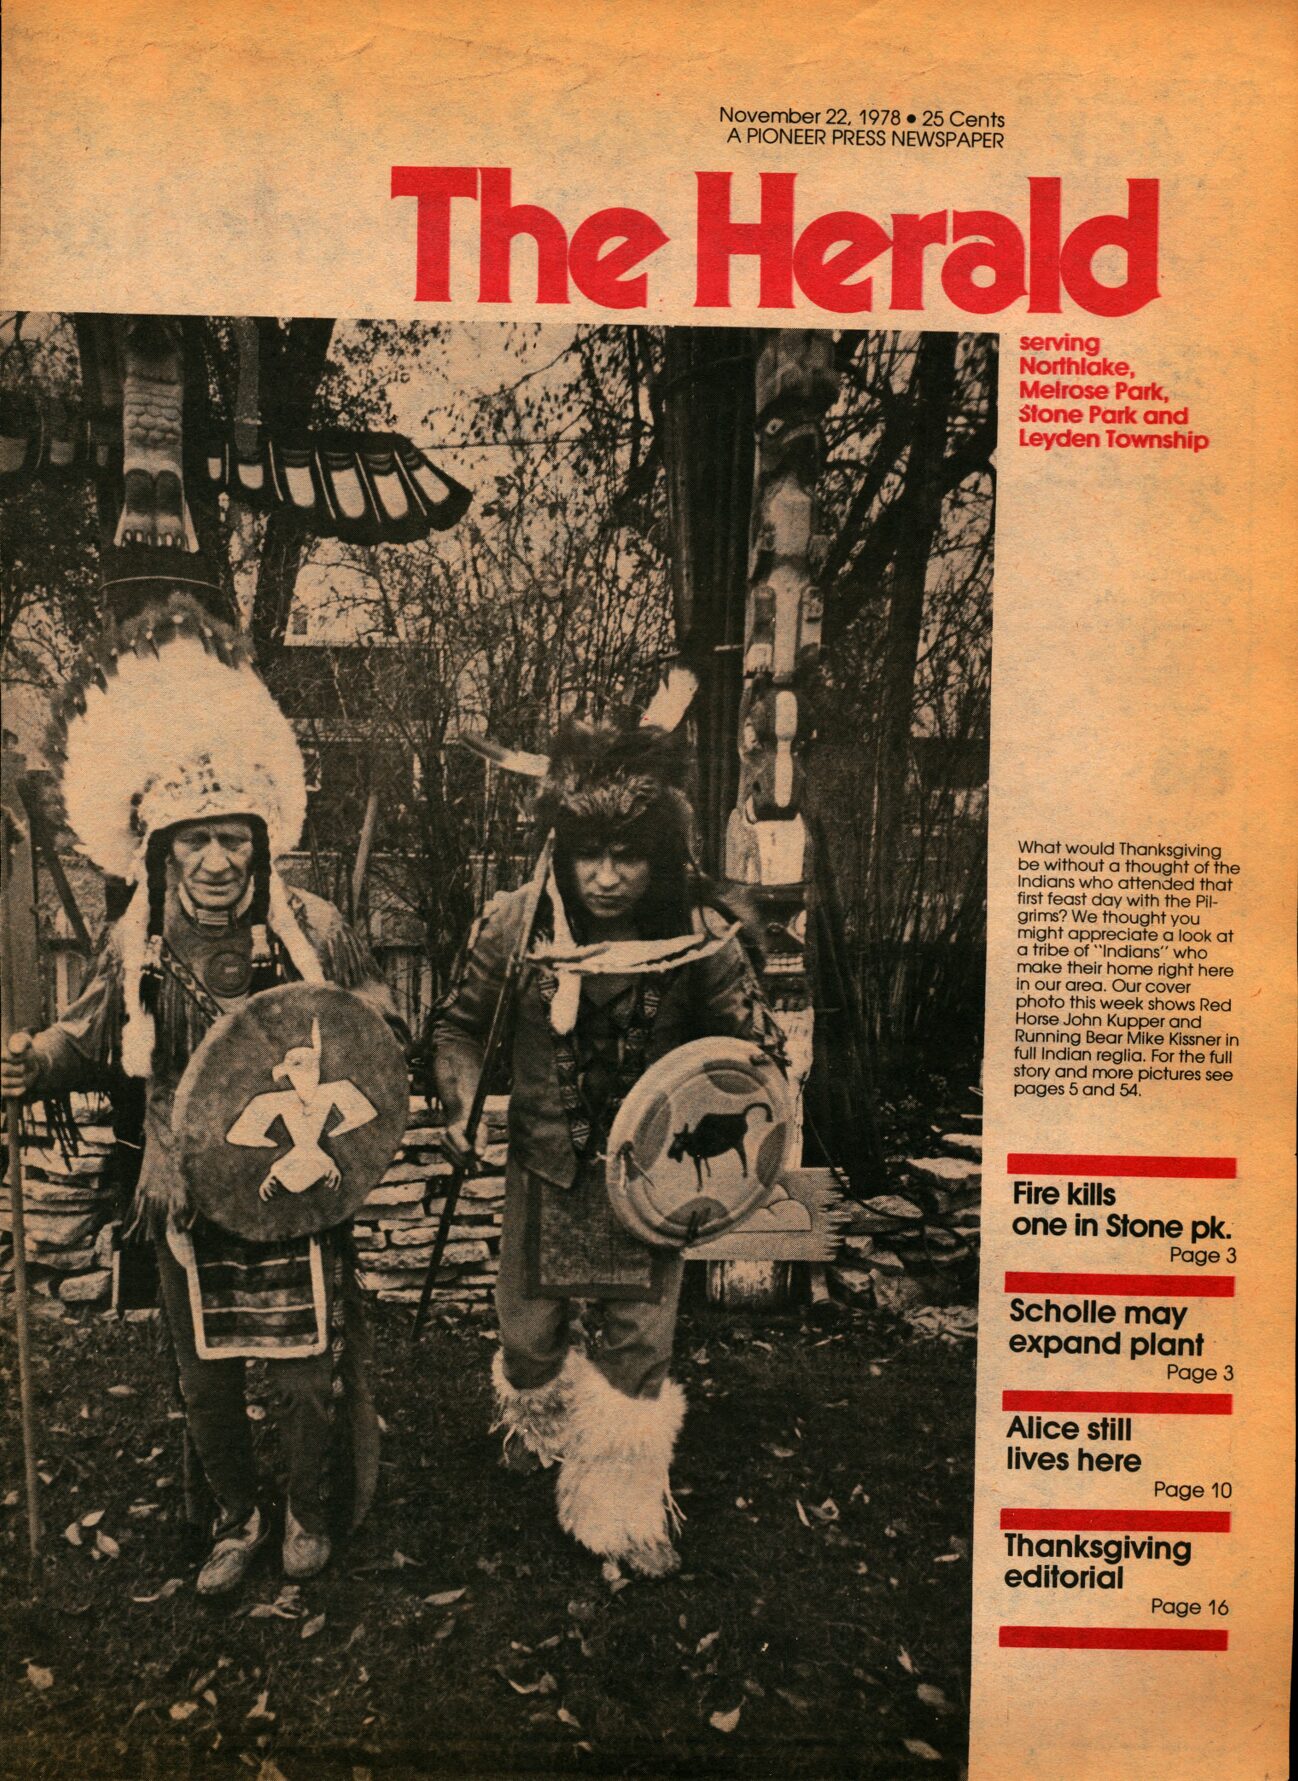 The Herald – 19781122